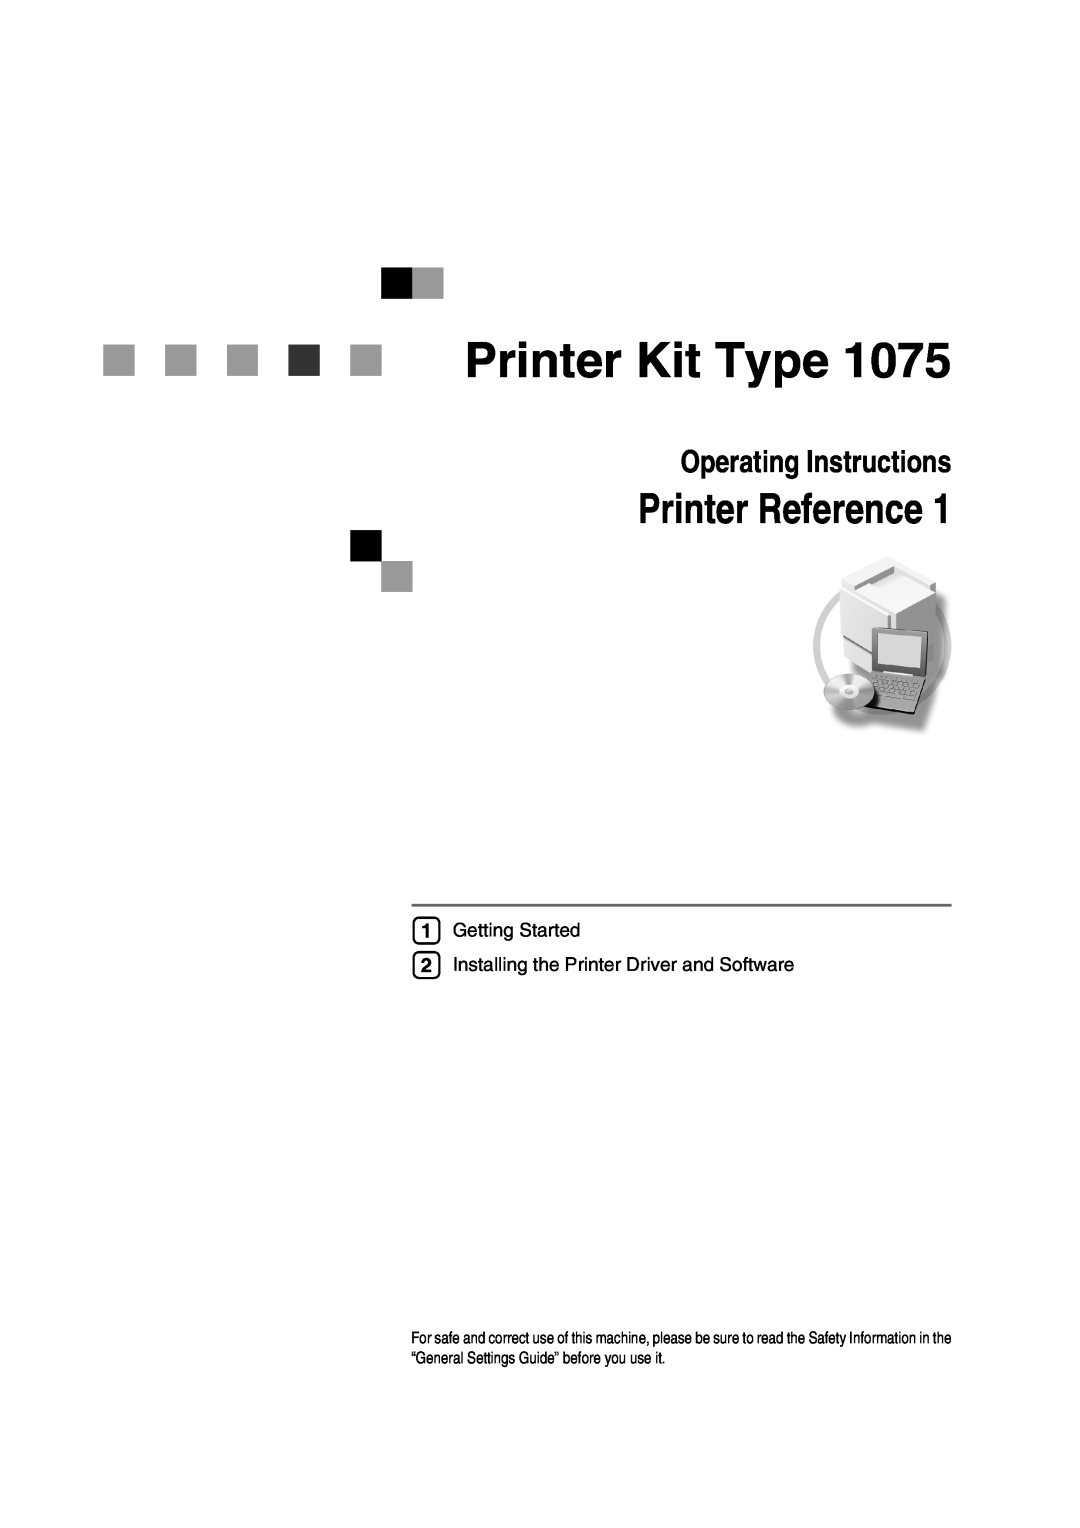 Xerox 1075 manual Printer Kit Type, Printer Reference, Operating Instructions 